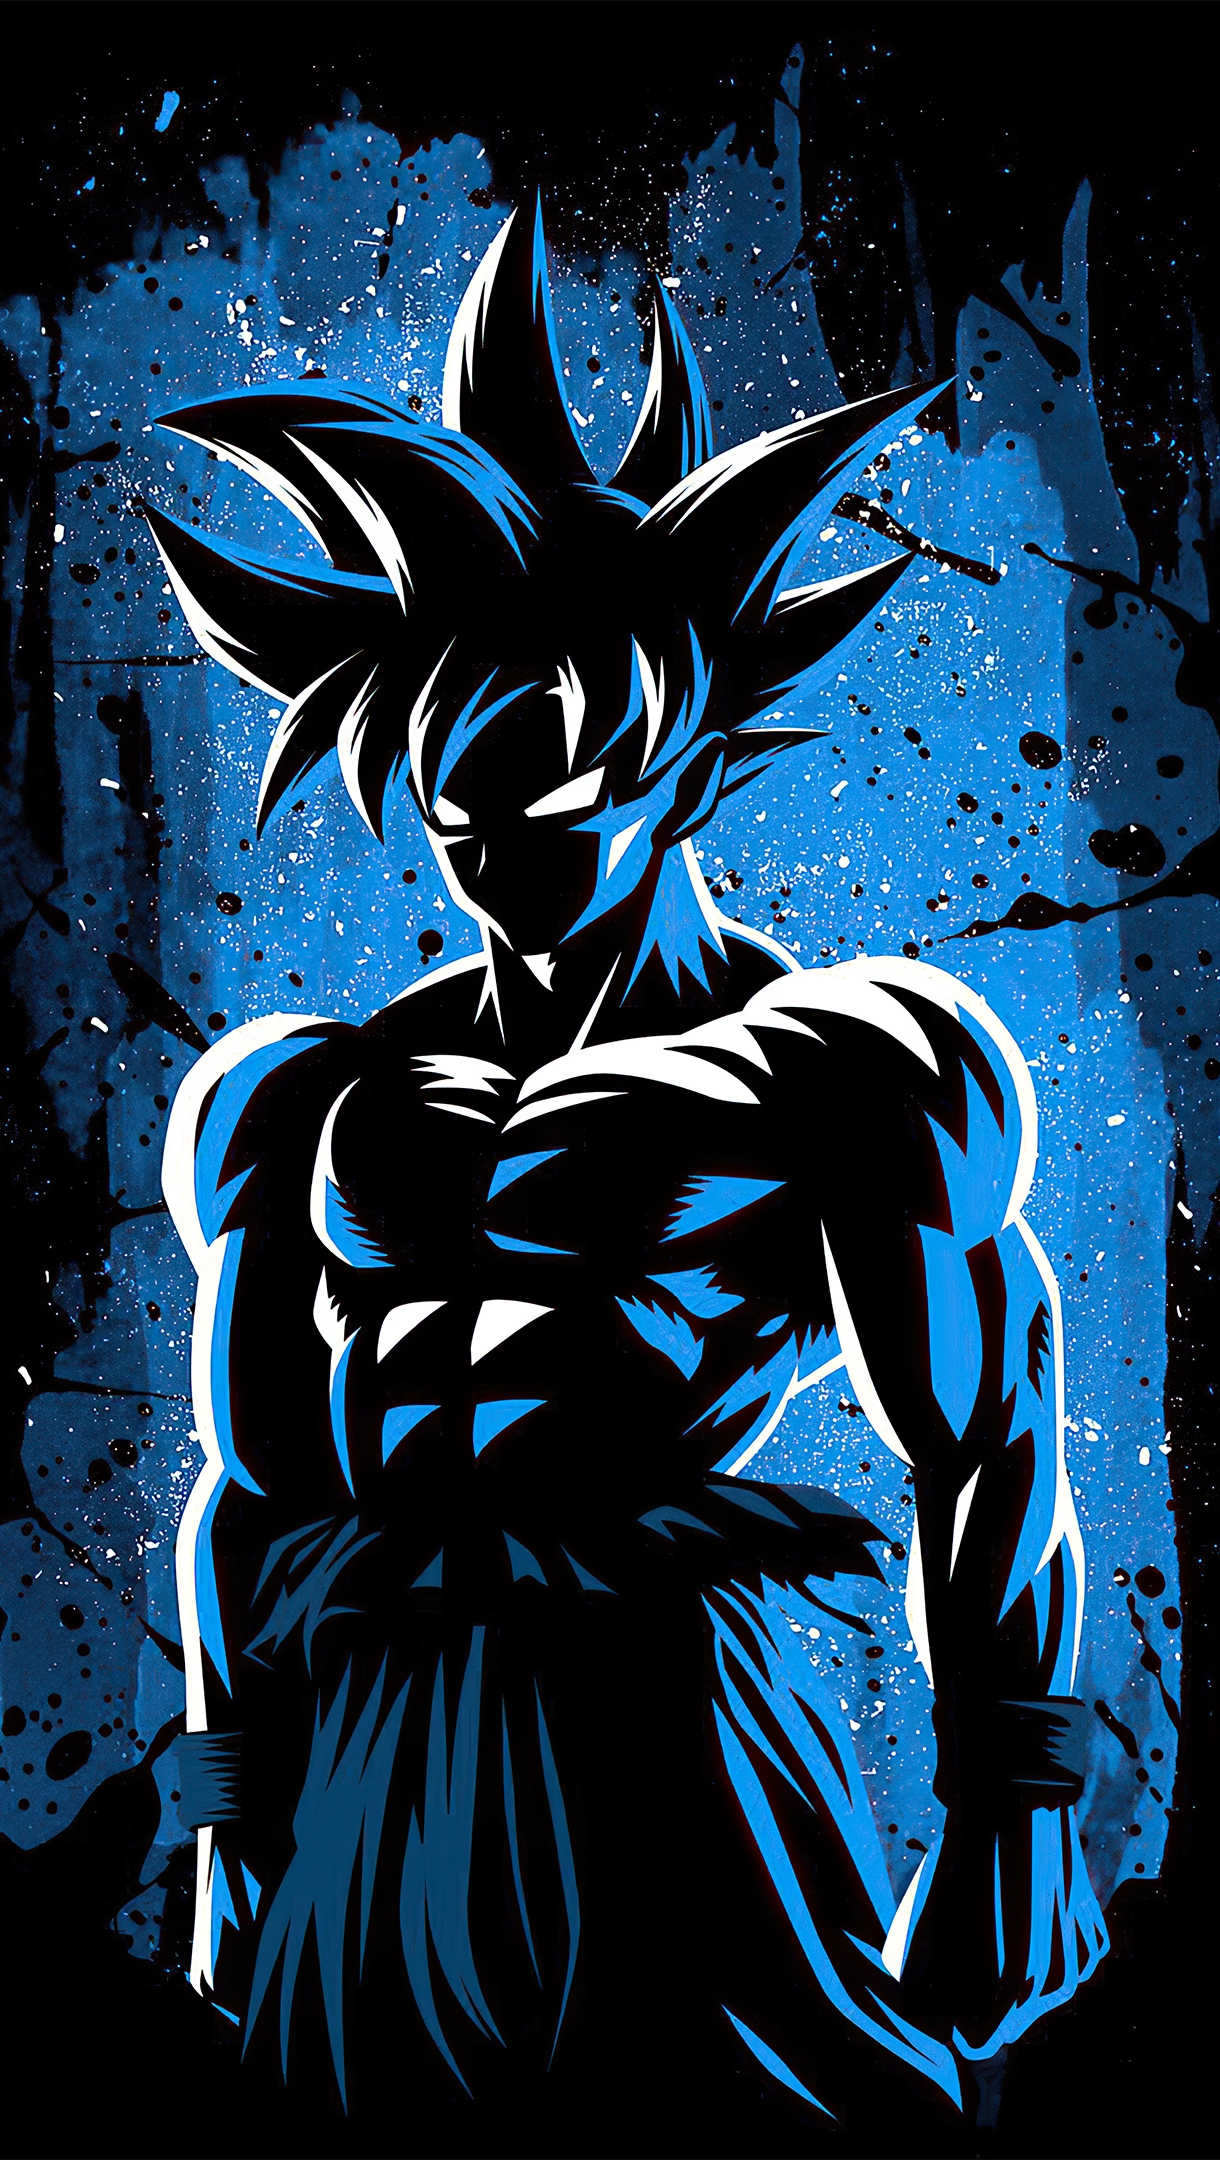 Goku Minimalist style 2020 Anime Wallpaper 4k Ultra HD ID:6162